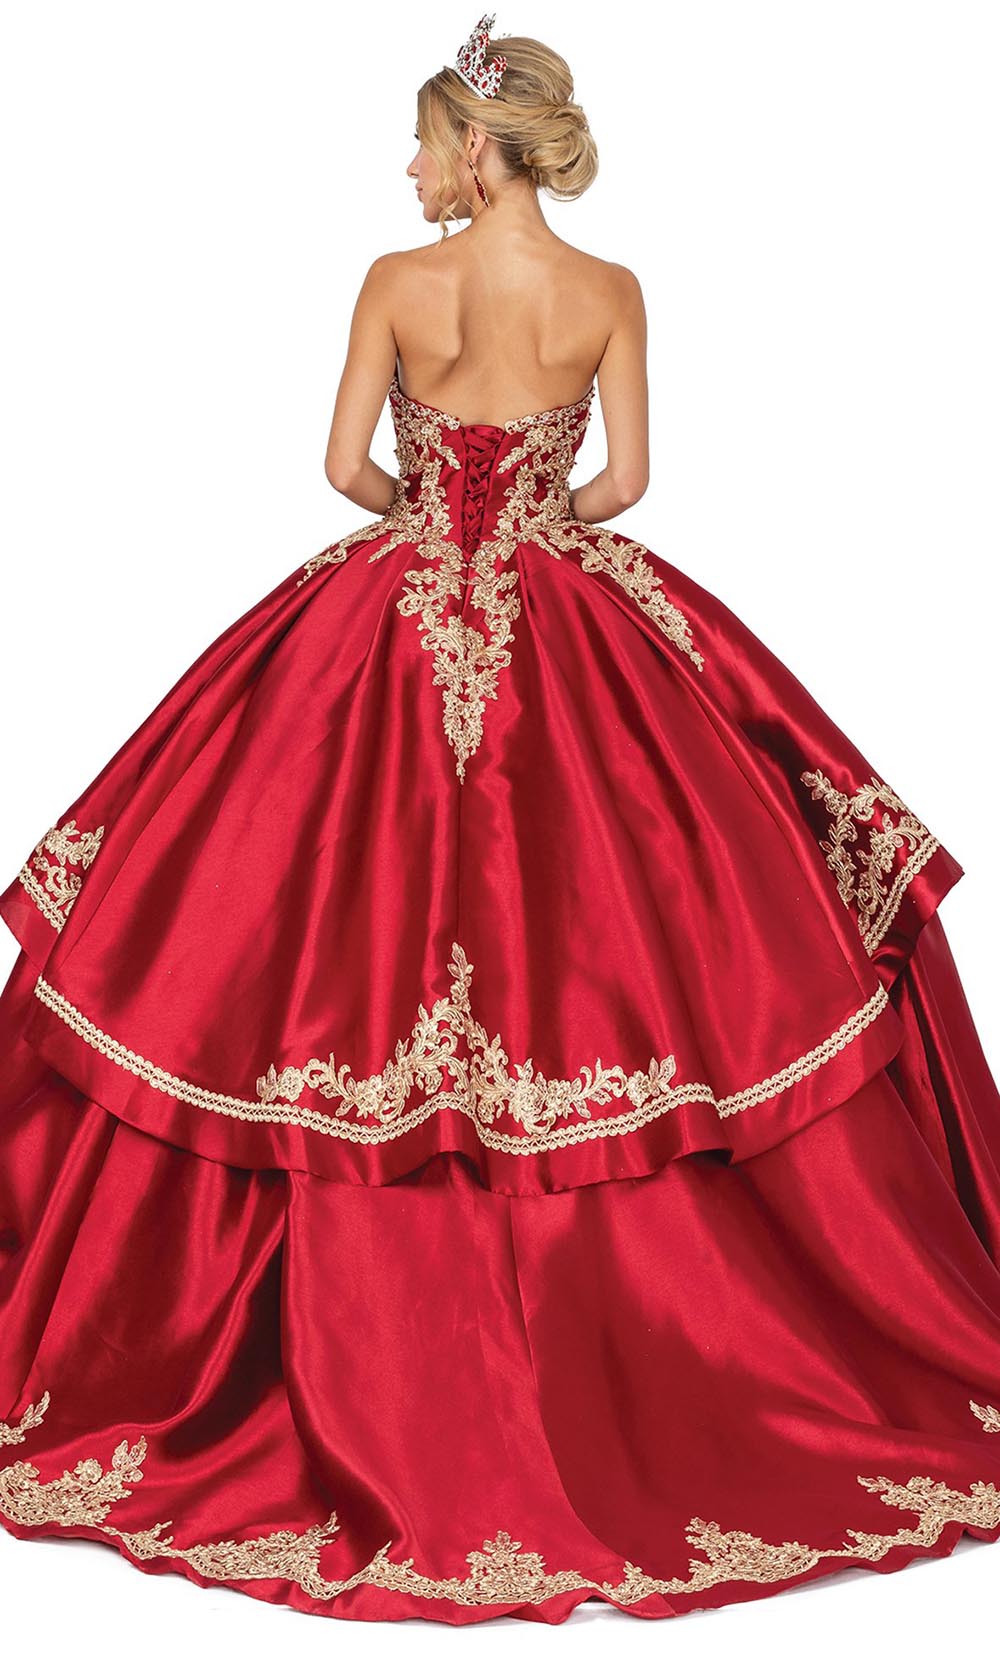 Dancing Queen - 1591 Sleek Gilt Applique Ballgown In Burgundy